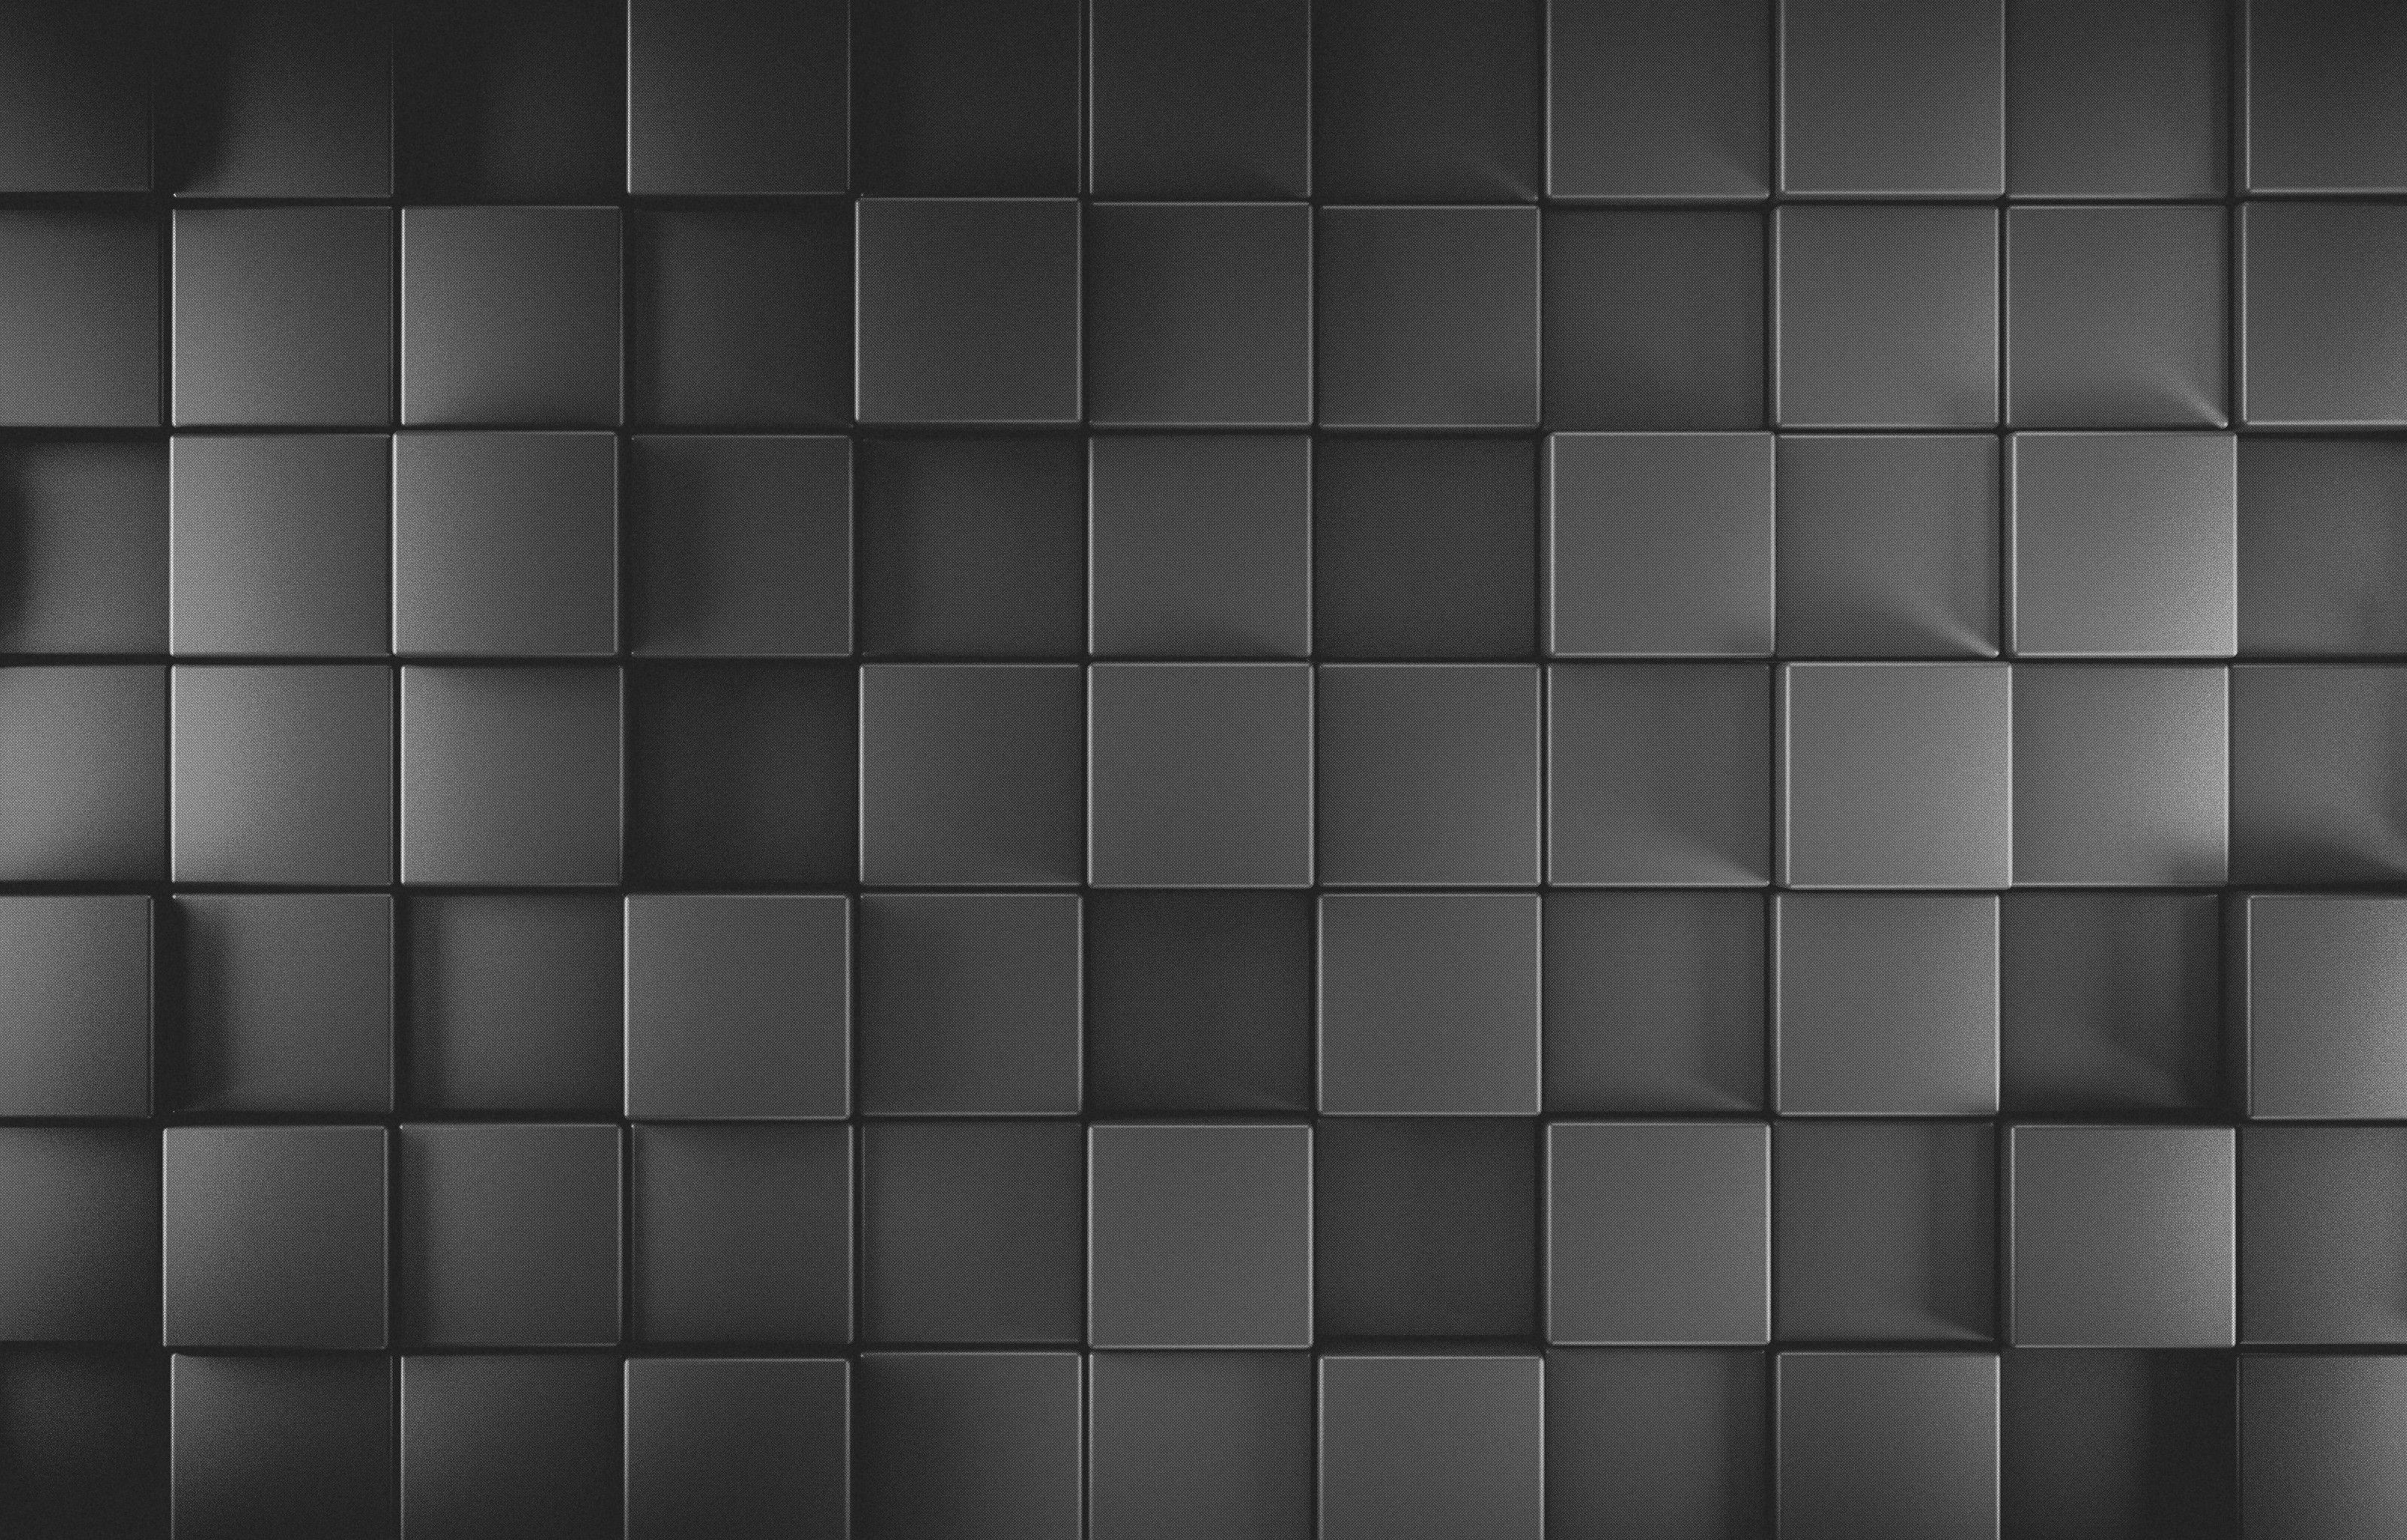 Aesthetic Black And White Square Wallpaper / Black grid wallpaper (75 ...